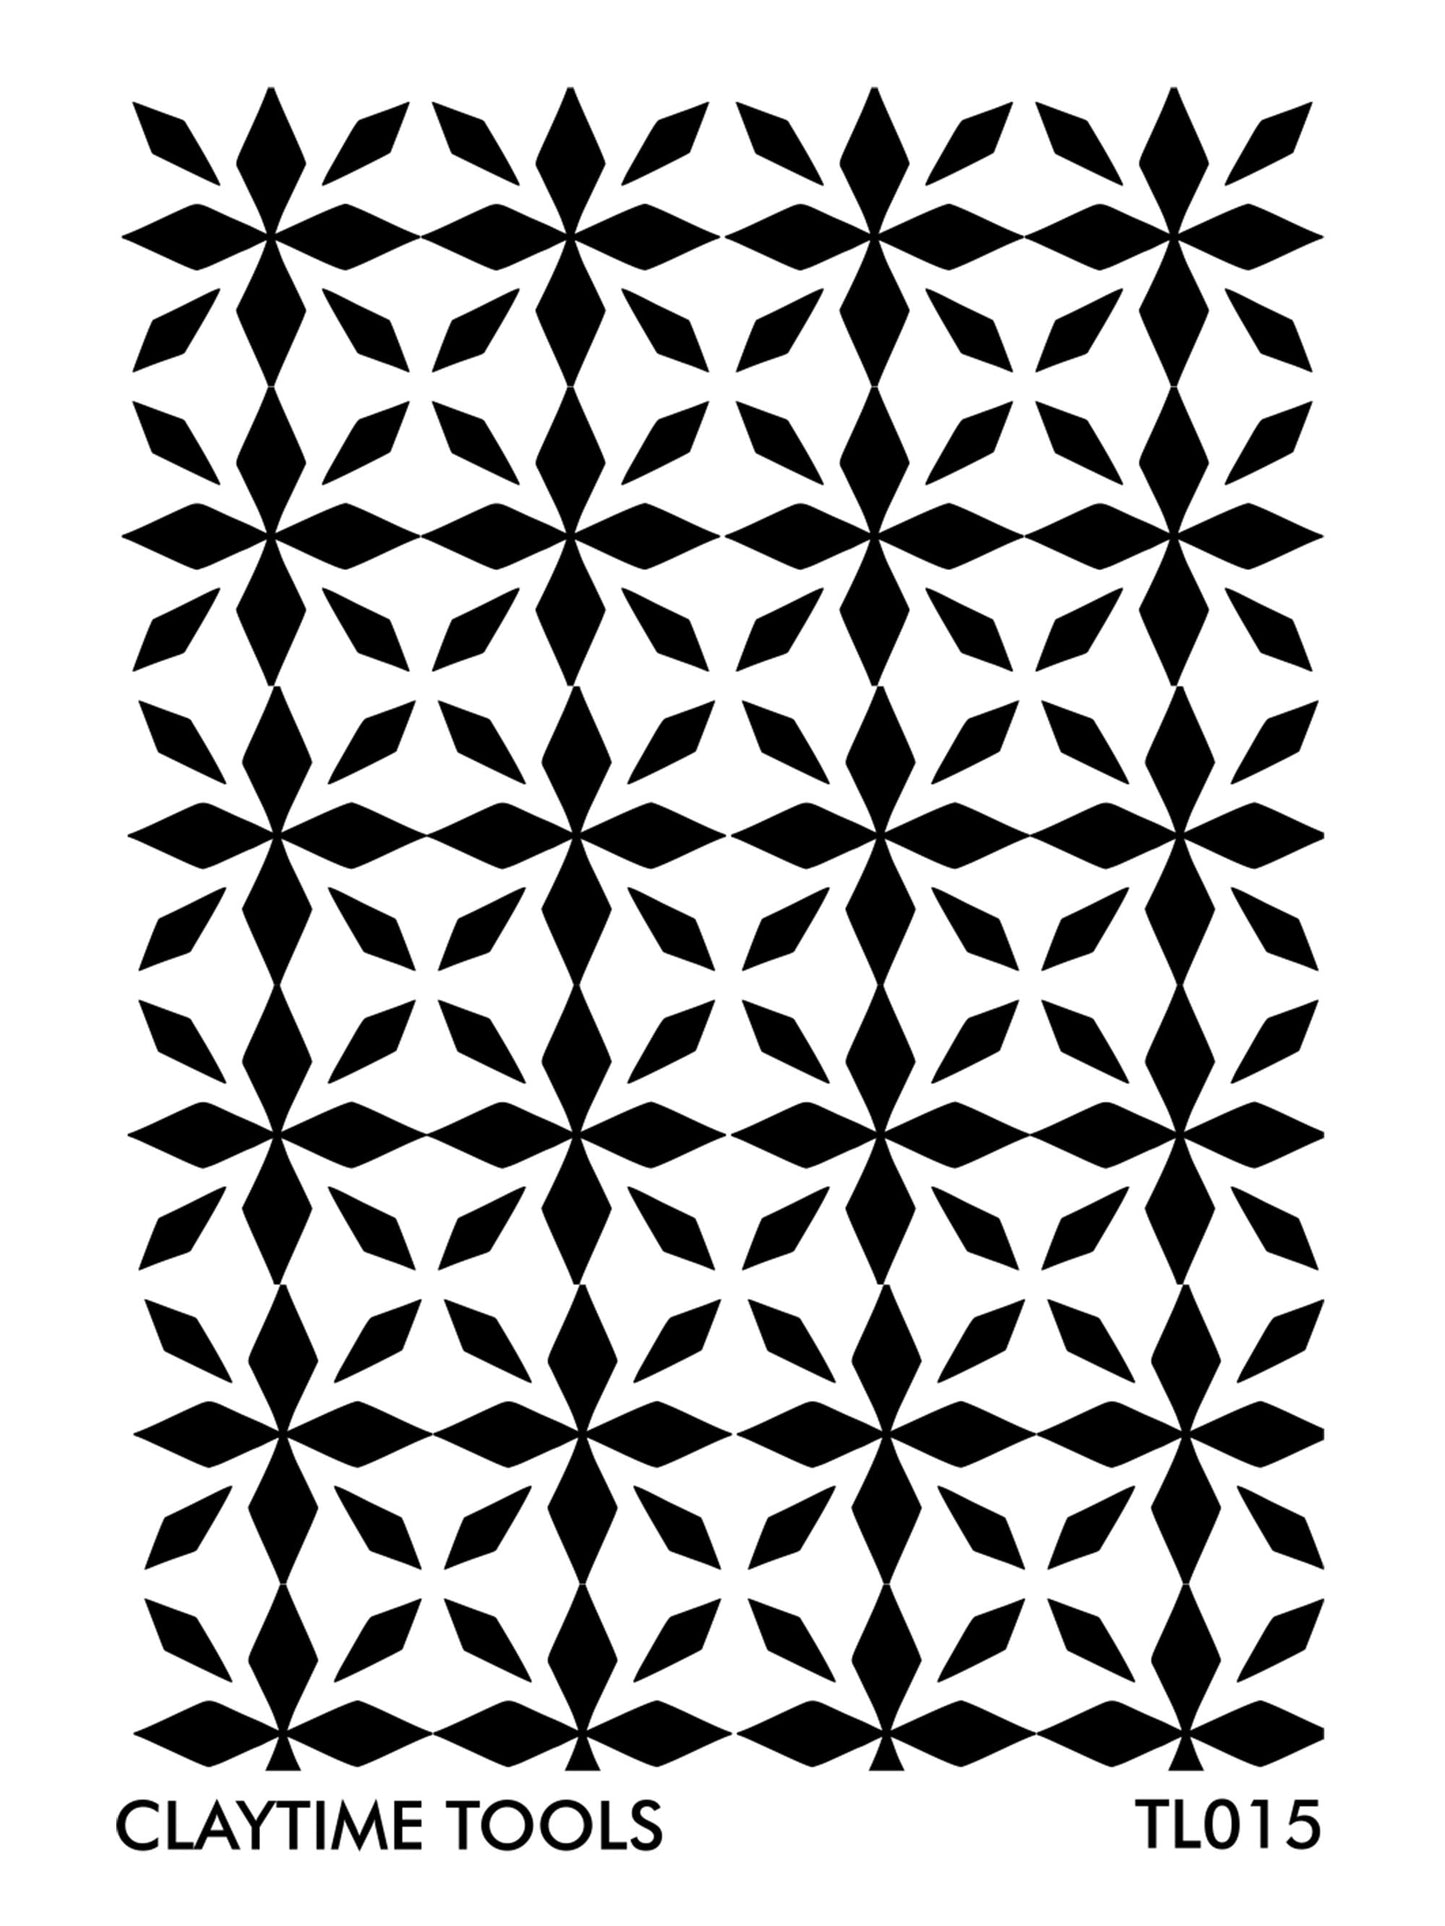 Rhombus flower tile silkscreen pattern on a black and white background.